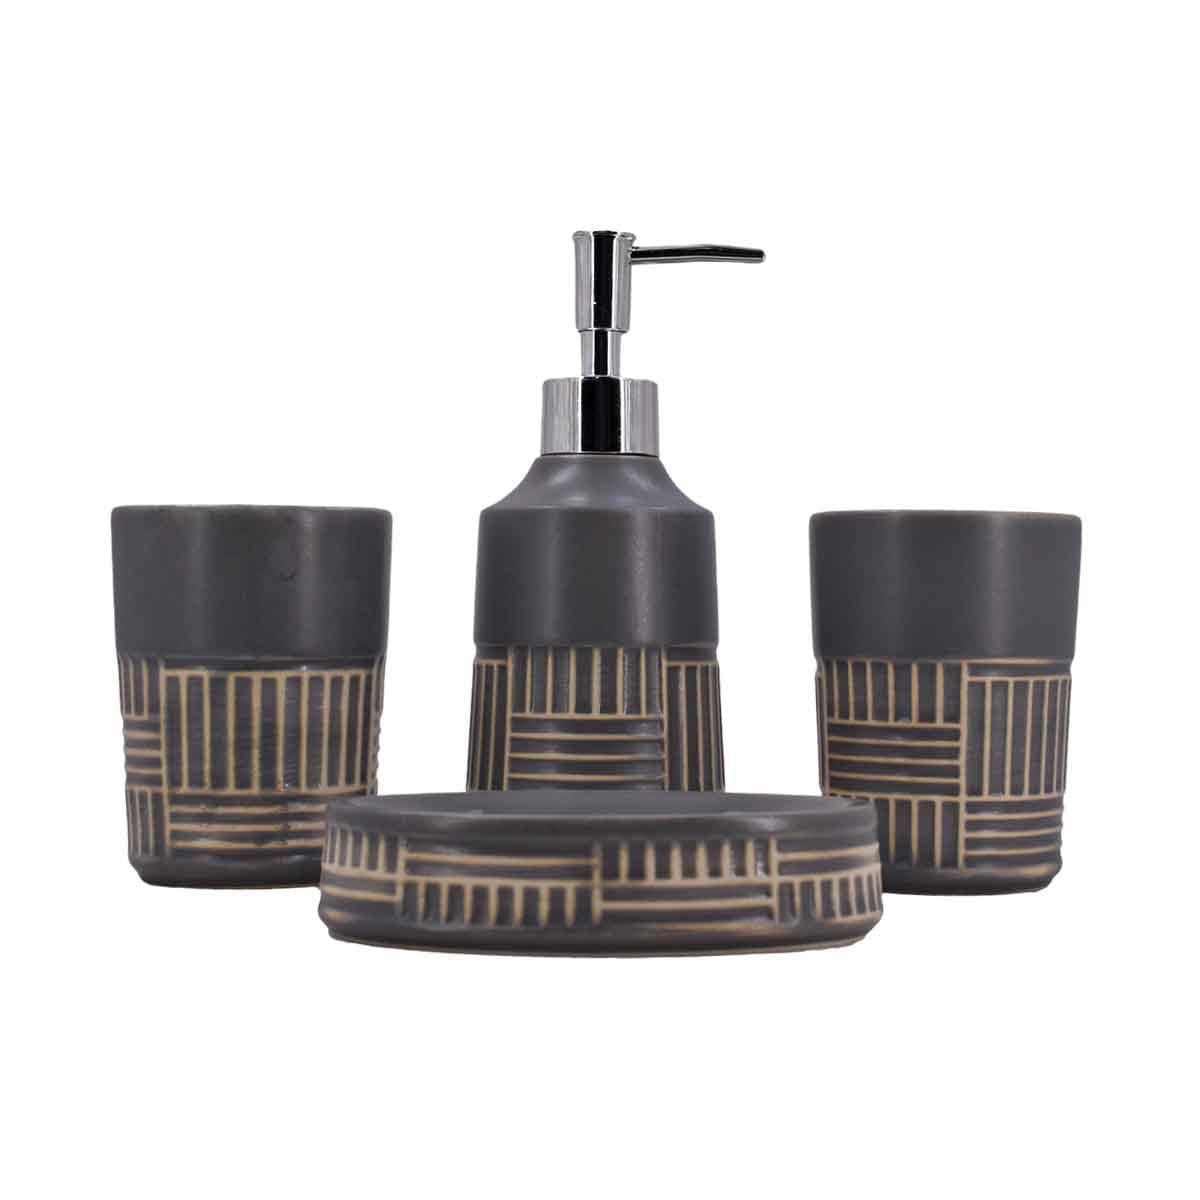 Ceramic Bathroom Accessories Set of 4 Bath Set with Soap Dispenser (8144)